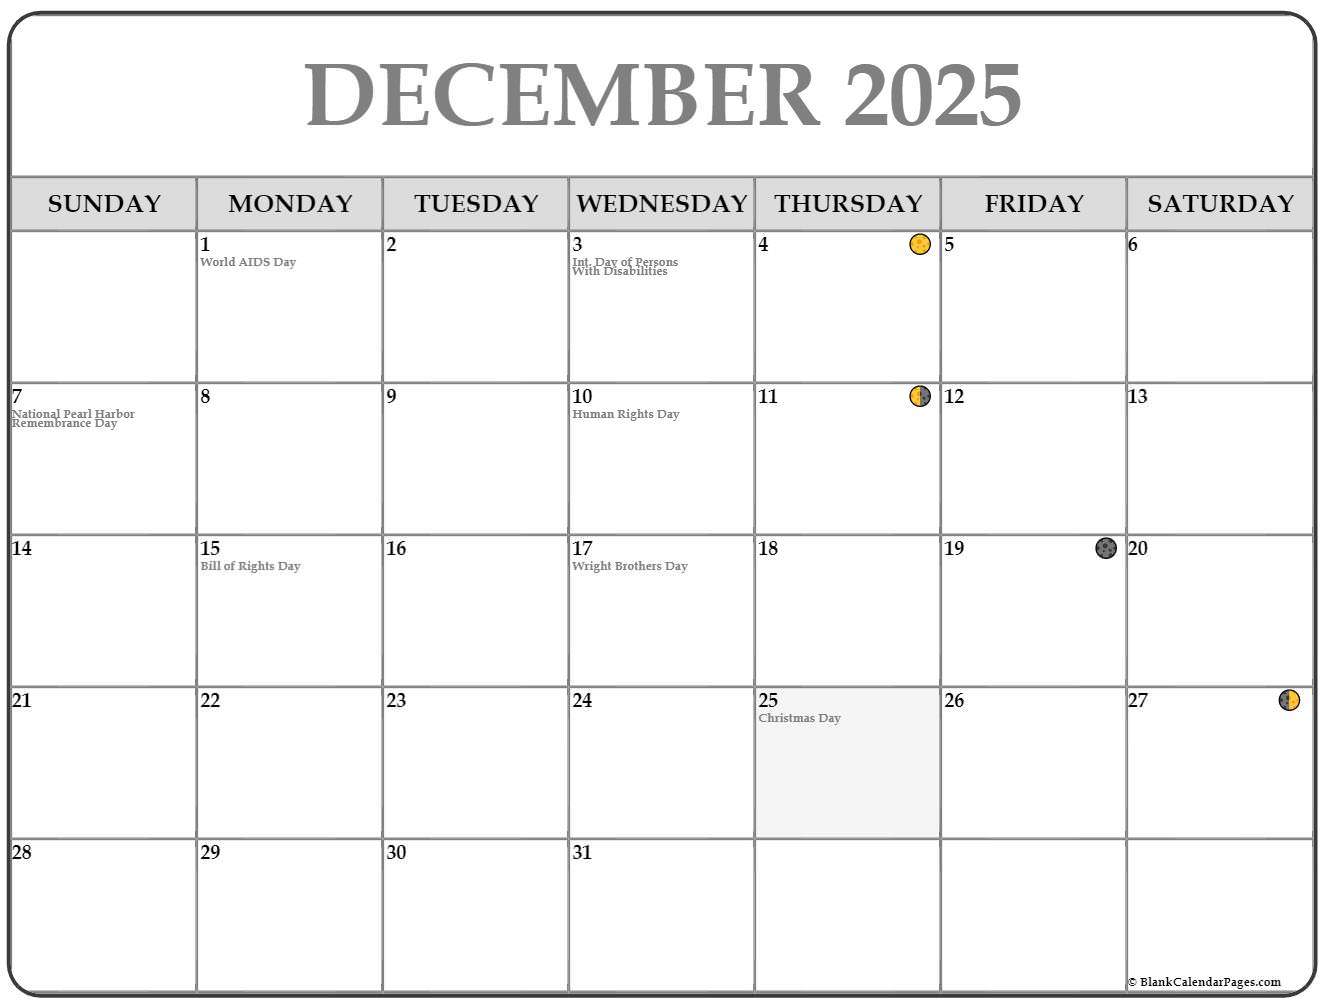 december-2025-lunar-calendar-moon-phase-calendar